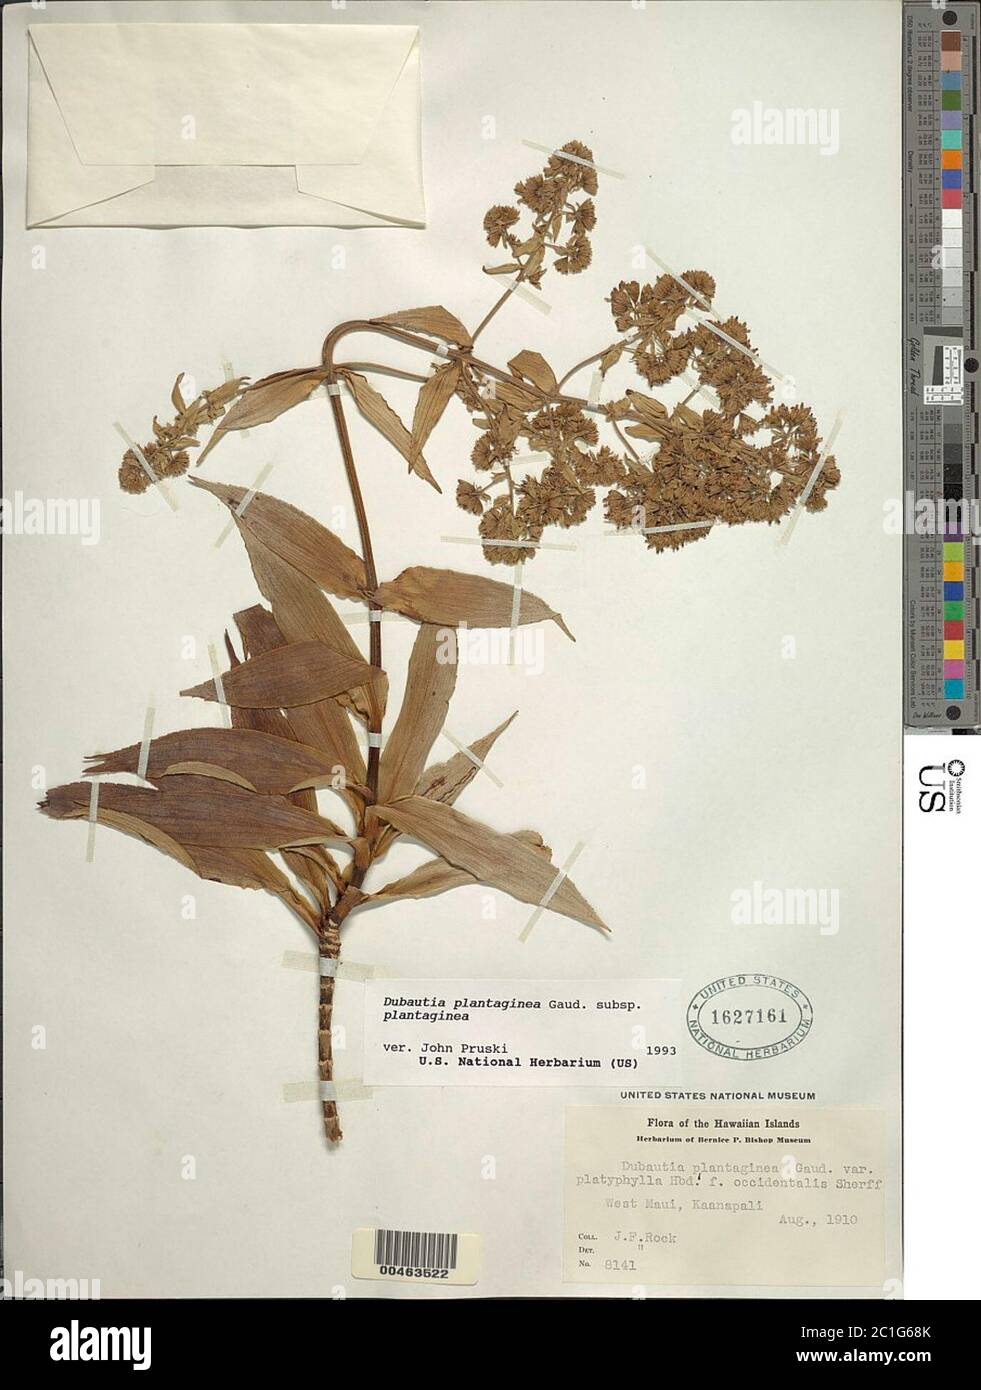 Dubautia plantaginea Gaudich subsp plantaginea Dubautia plantaginea Gaudich subsp plantaginea. Stock Photo